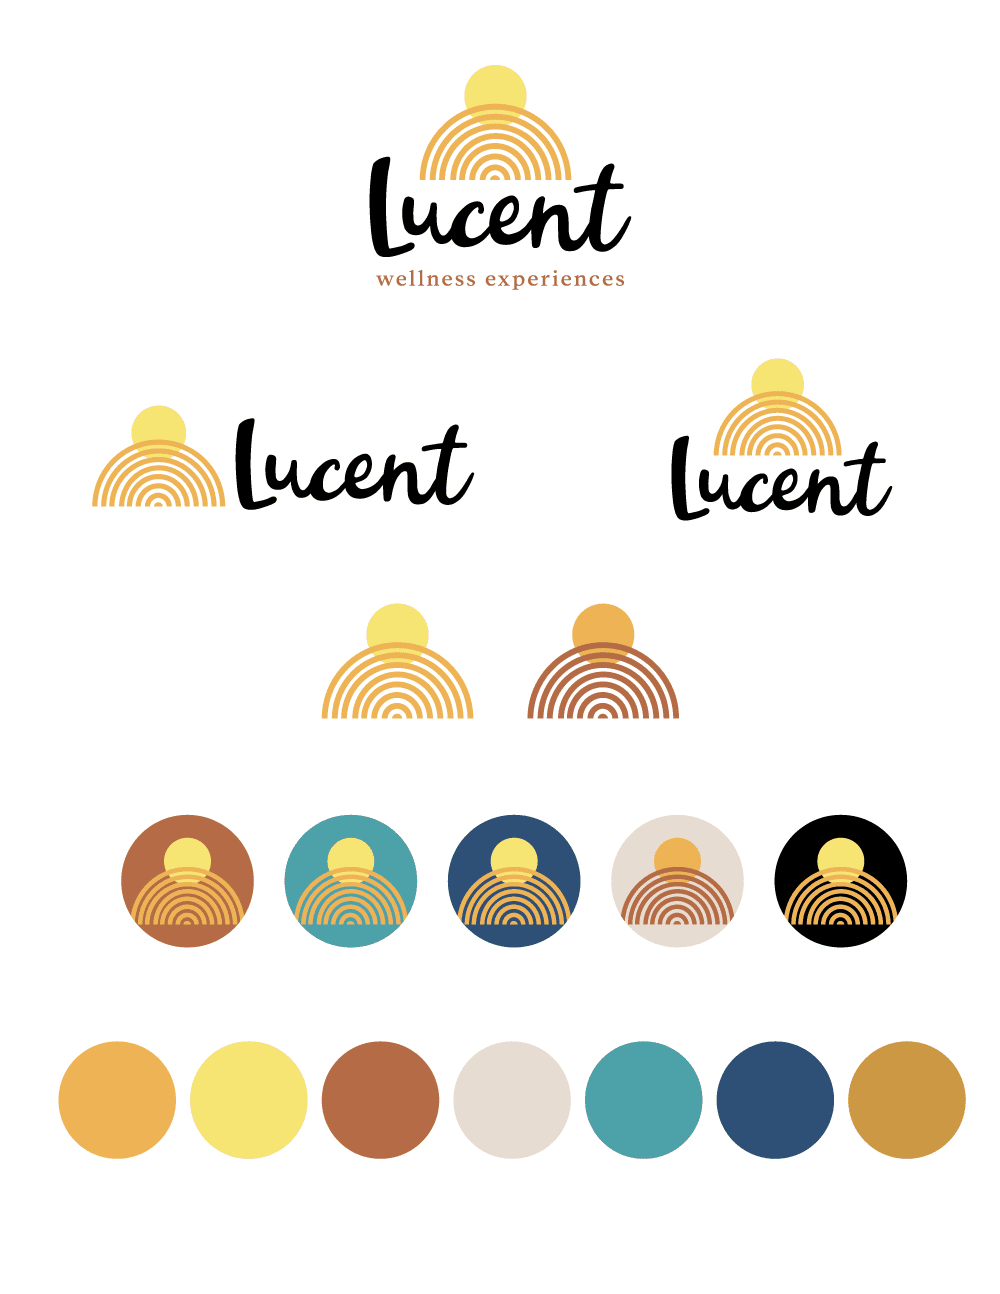 Lucent Wellness Experiences logo suite